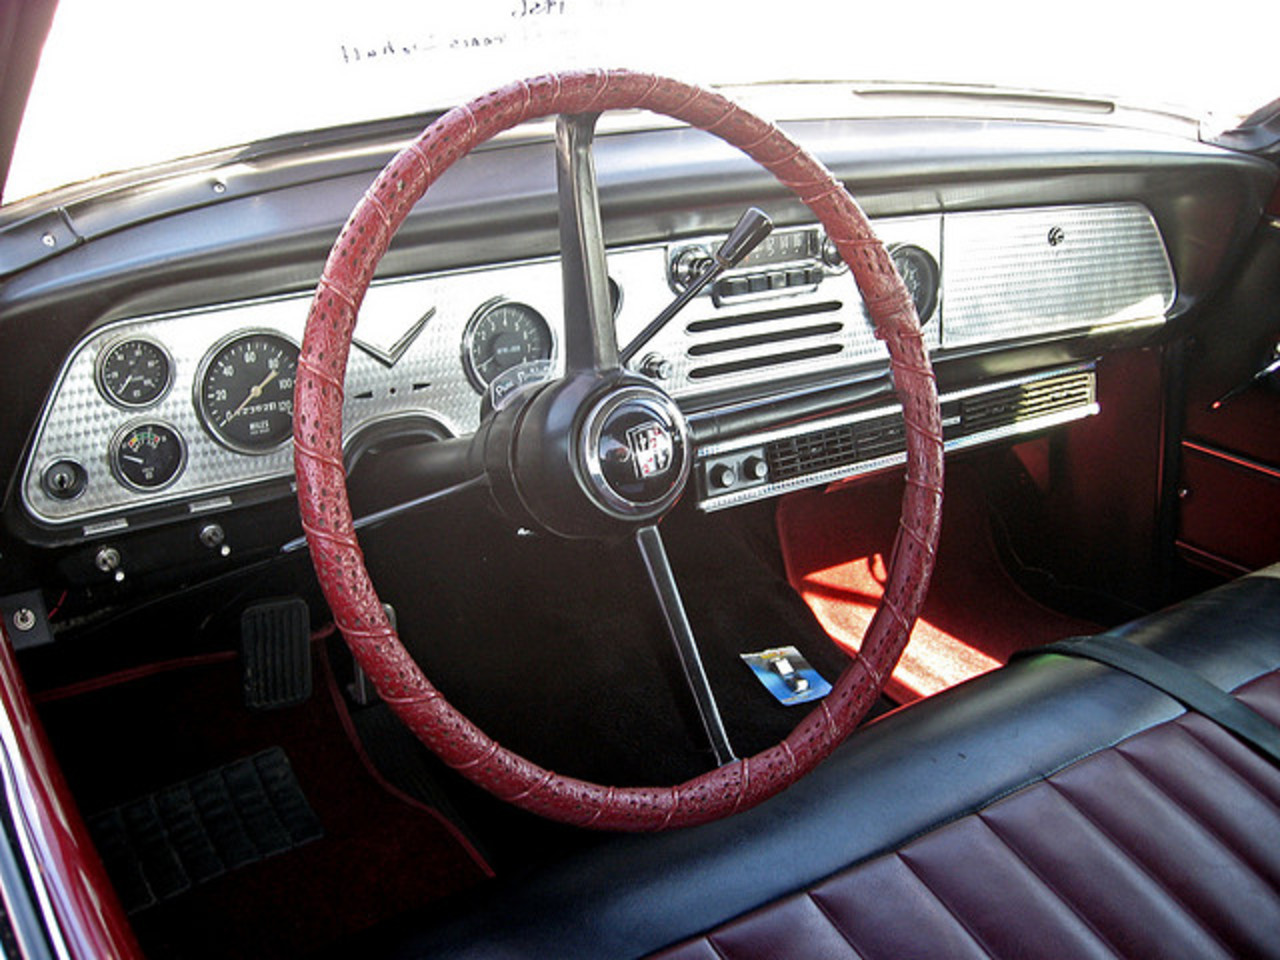 1956 Studebaker Power Hawk dash | Flickr - Photo Sharing!